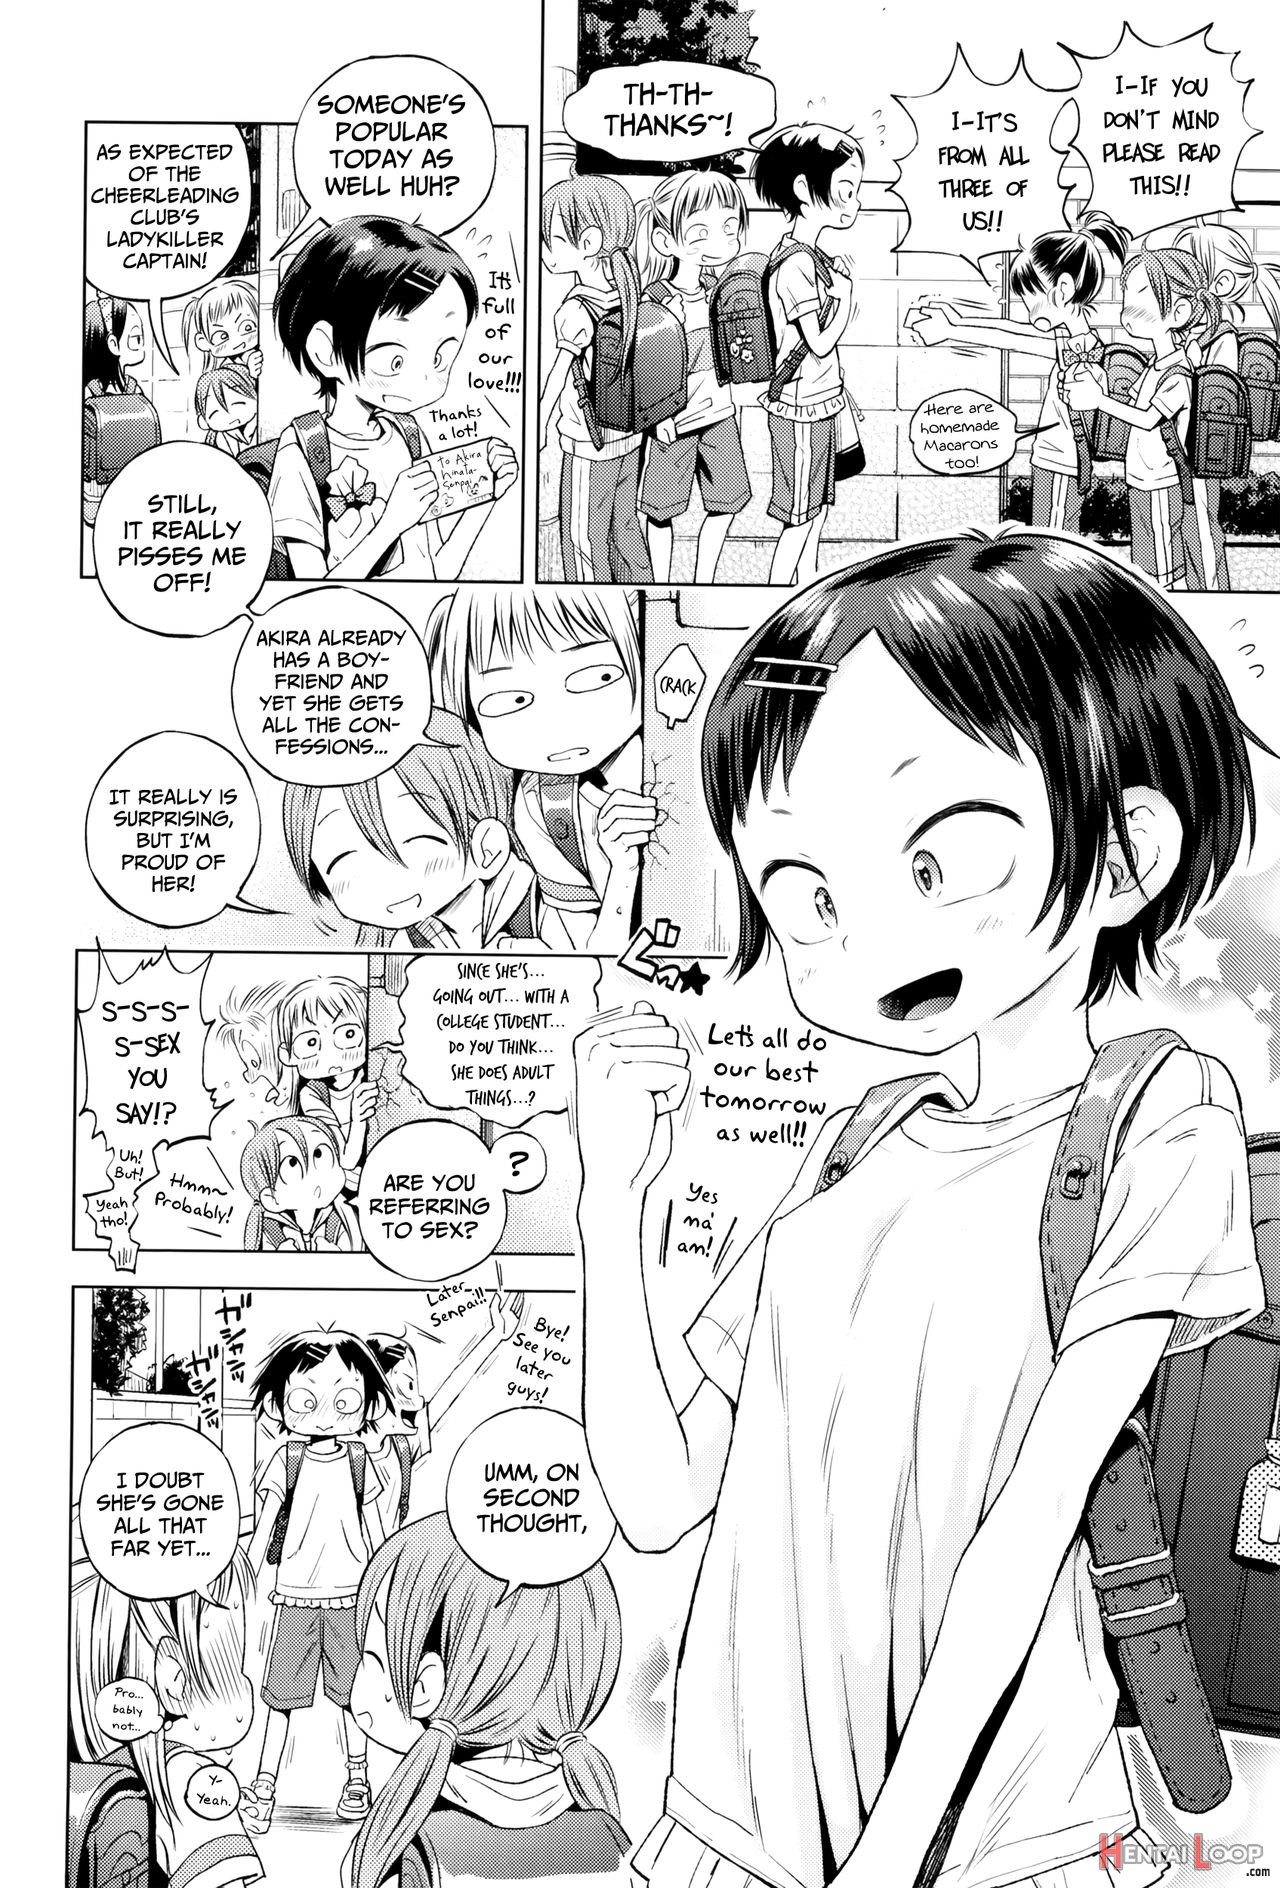 Flirt-cheer-love! Go, Akira-chan page 2